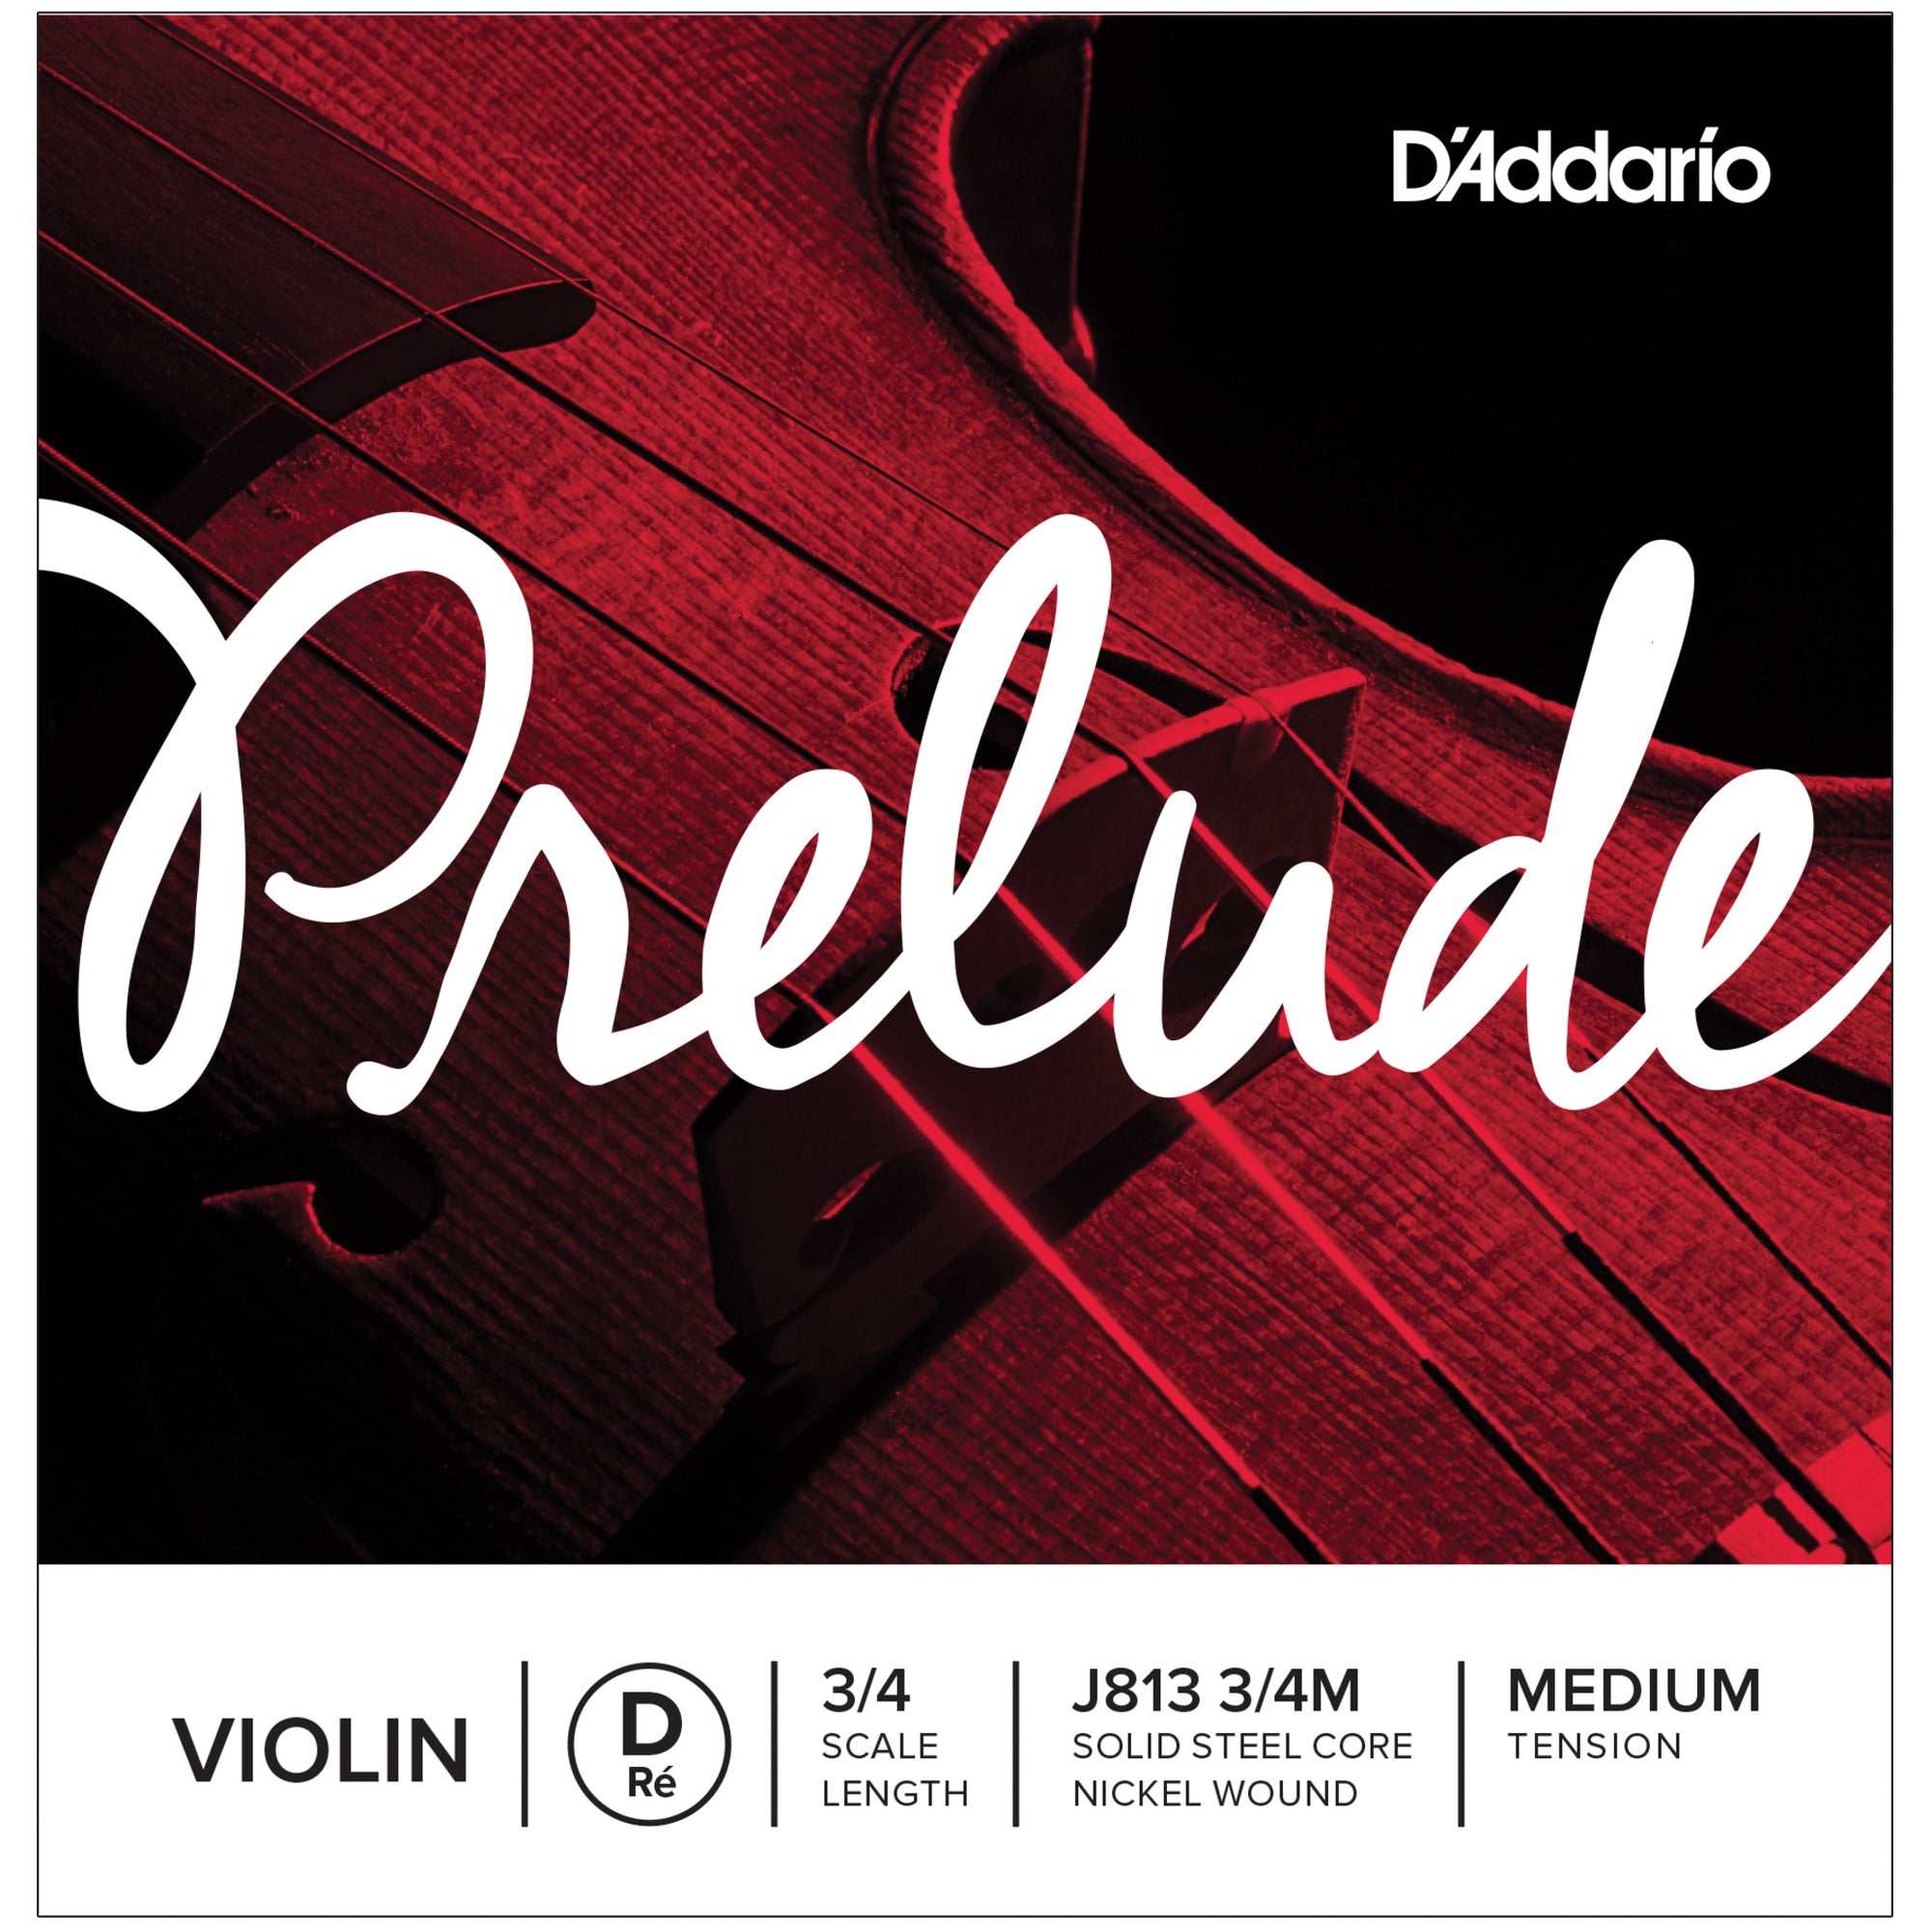 D'Addario J813 3/4M Prelude 3/4 D Violin Single String Medium J813